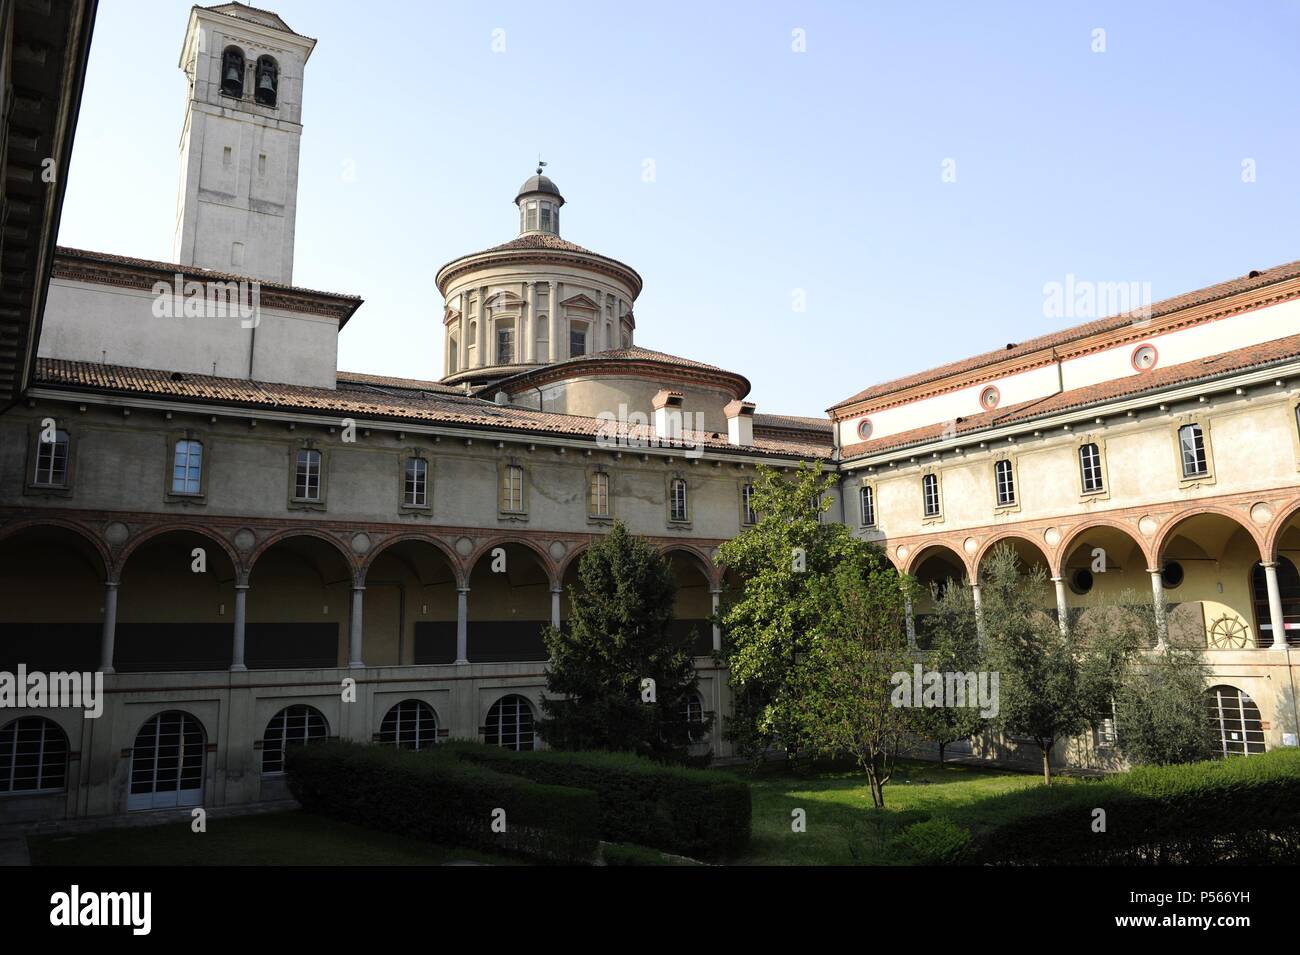 The Science and Technology Museum Leonardo da Vinci. Ancient monastery of San Vittore al Corpo. Cloister. Milan. Italy. Stock Photo